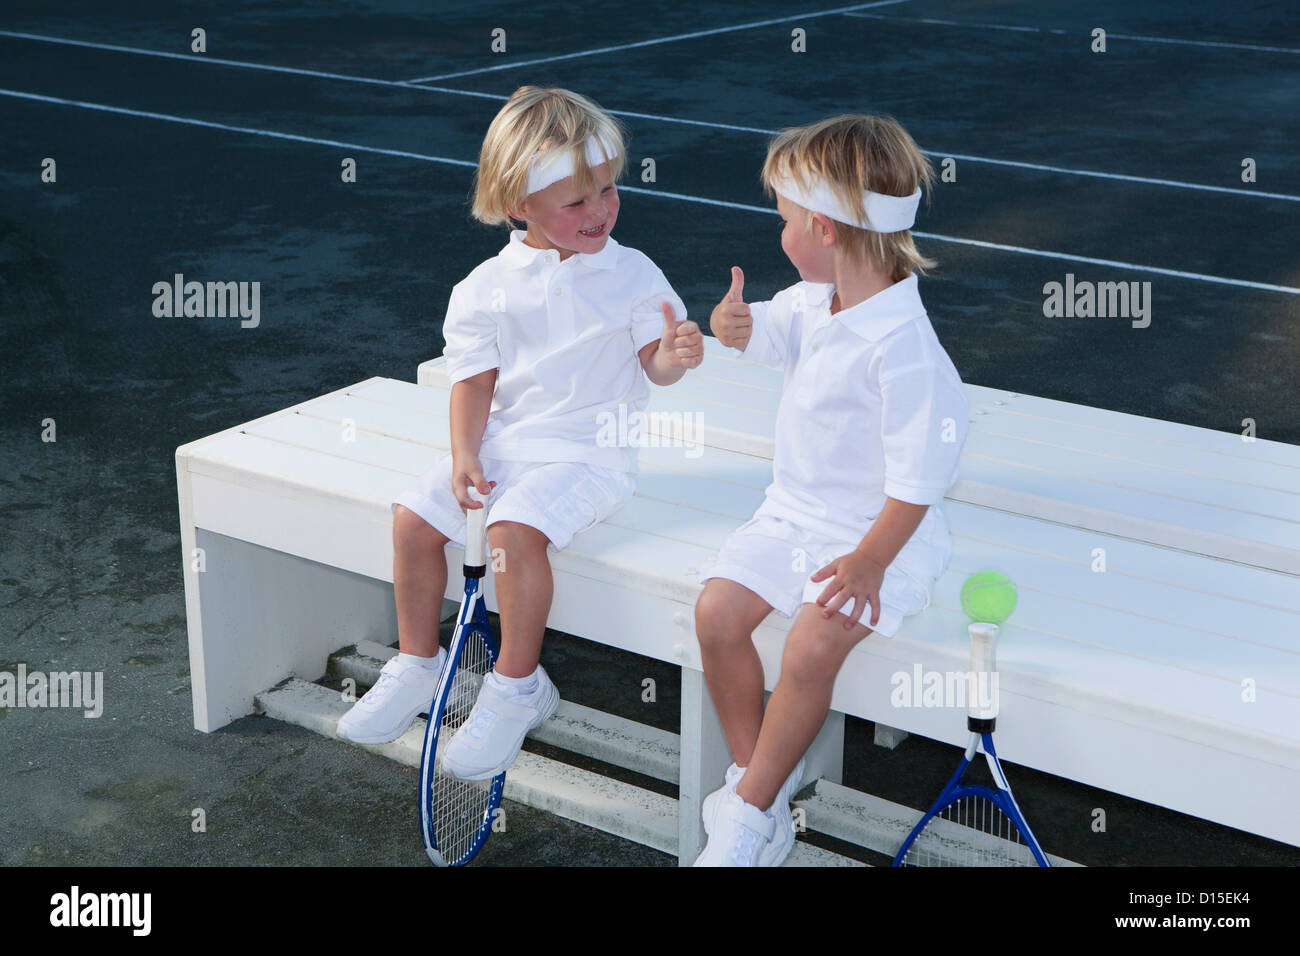 USA, Arizona, Texarkana, deux garçons (2-3 ans) assis sur un banc avec des raquettes de tennis Banque D'Images